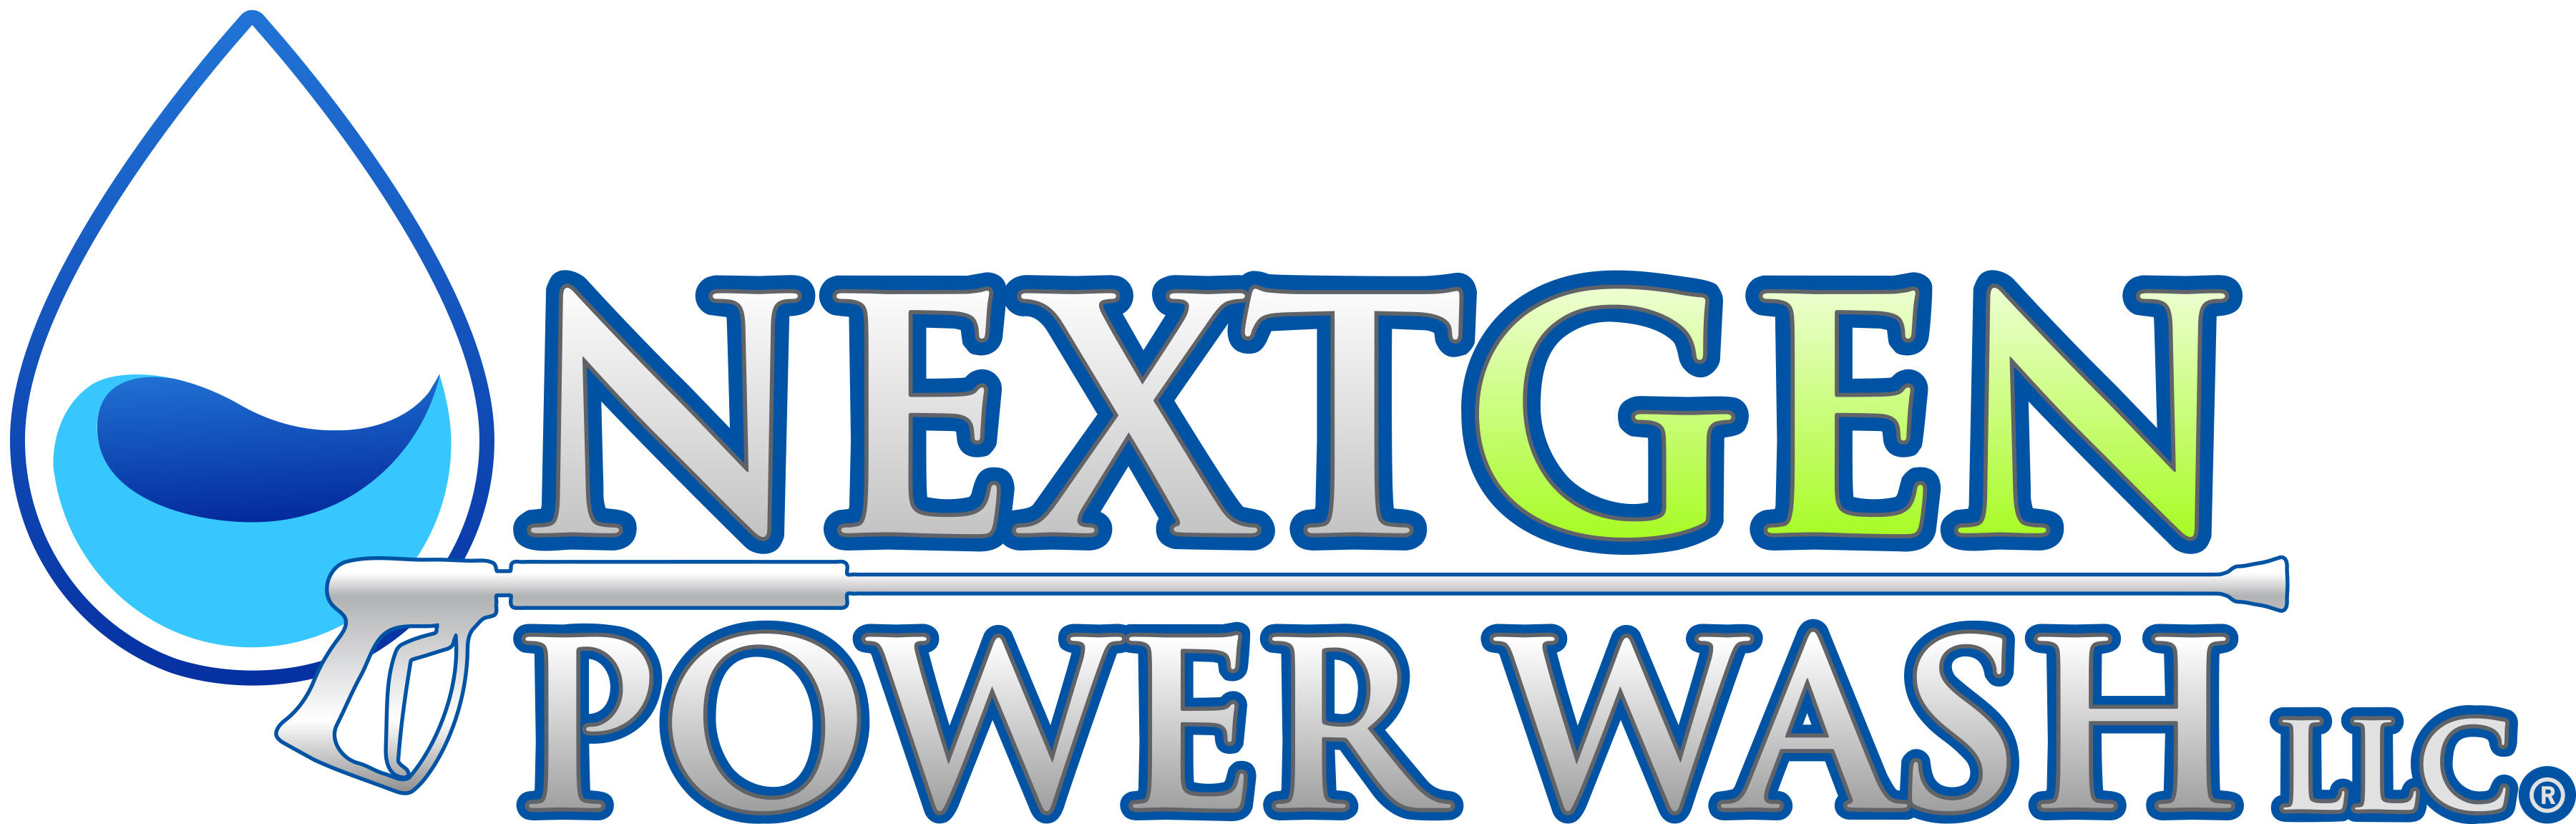 NextGen Power Washing Logo Selinsgrove Pennsylvania